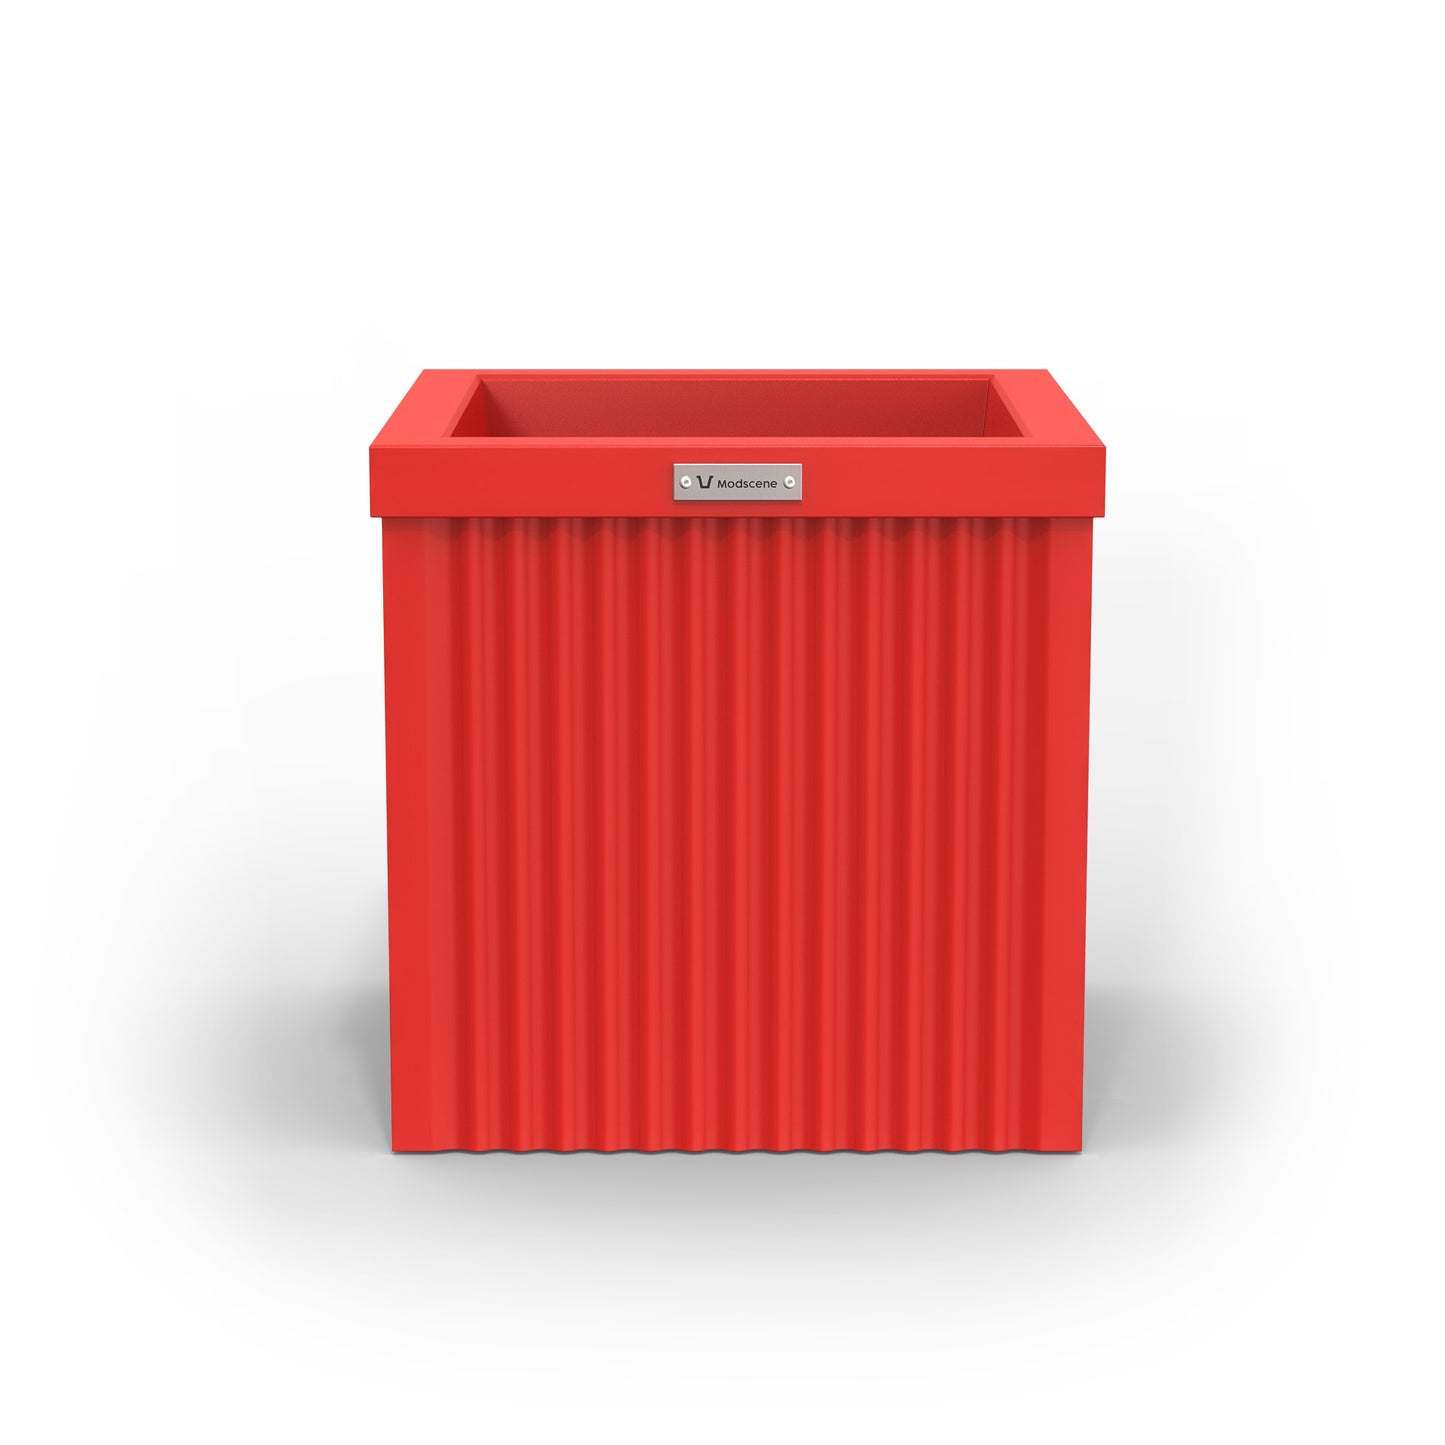 A corrugated square planter pot. The pot planter is red in colour.